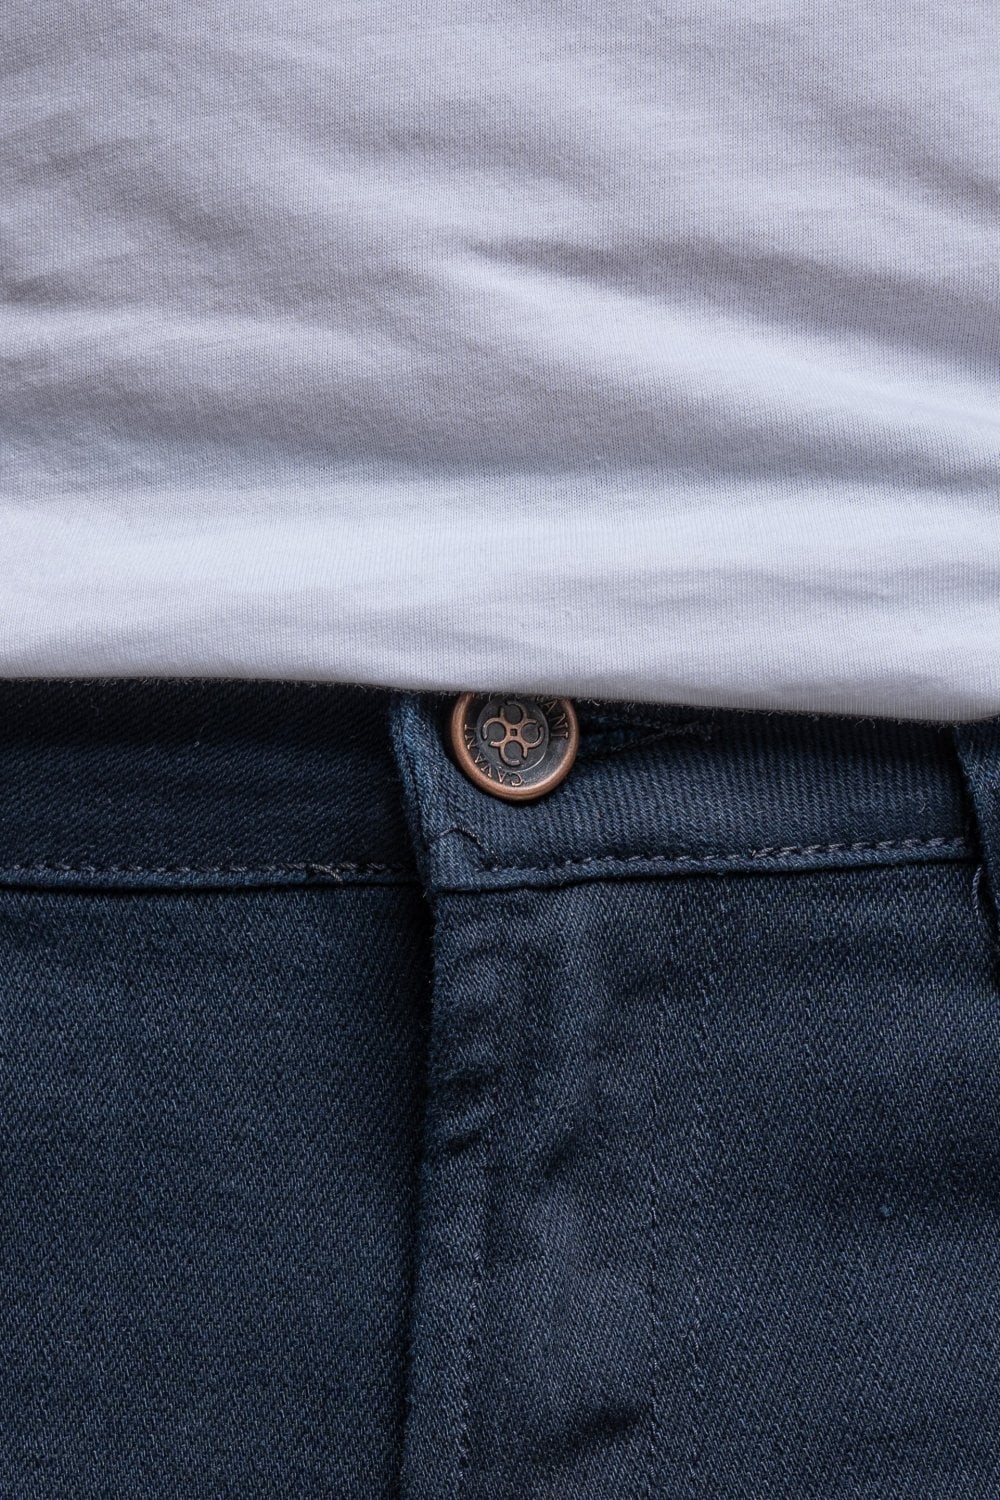 Men's Cotton Slim Fit Stretch Denim Jeans - MILANO - Navy Blue